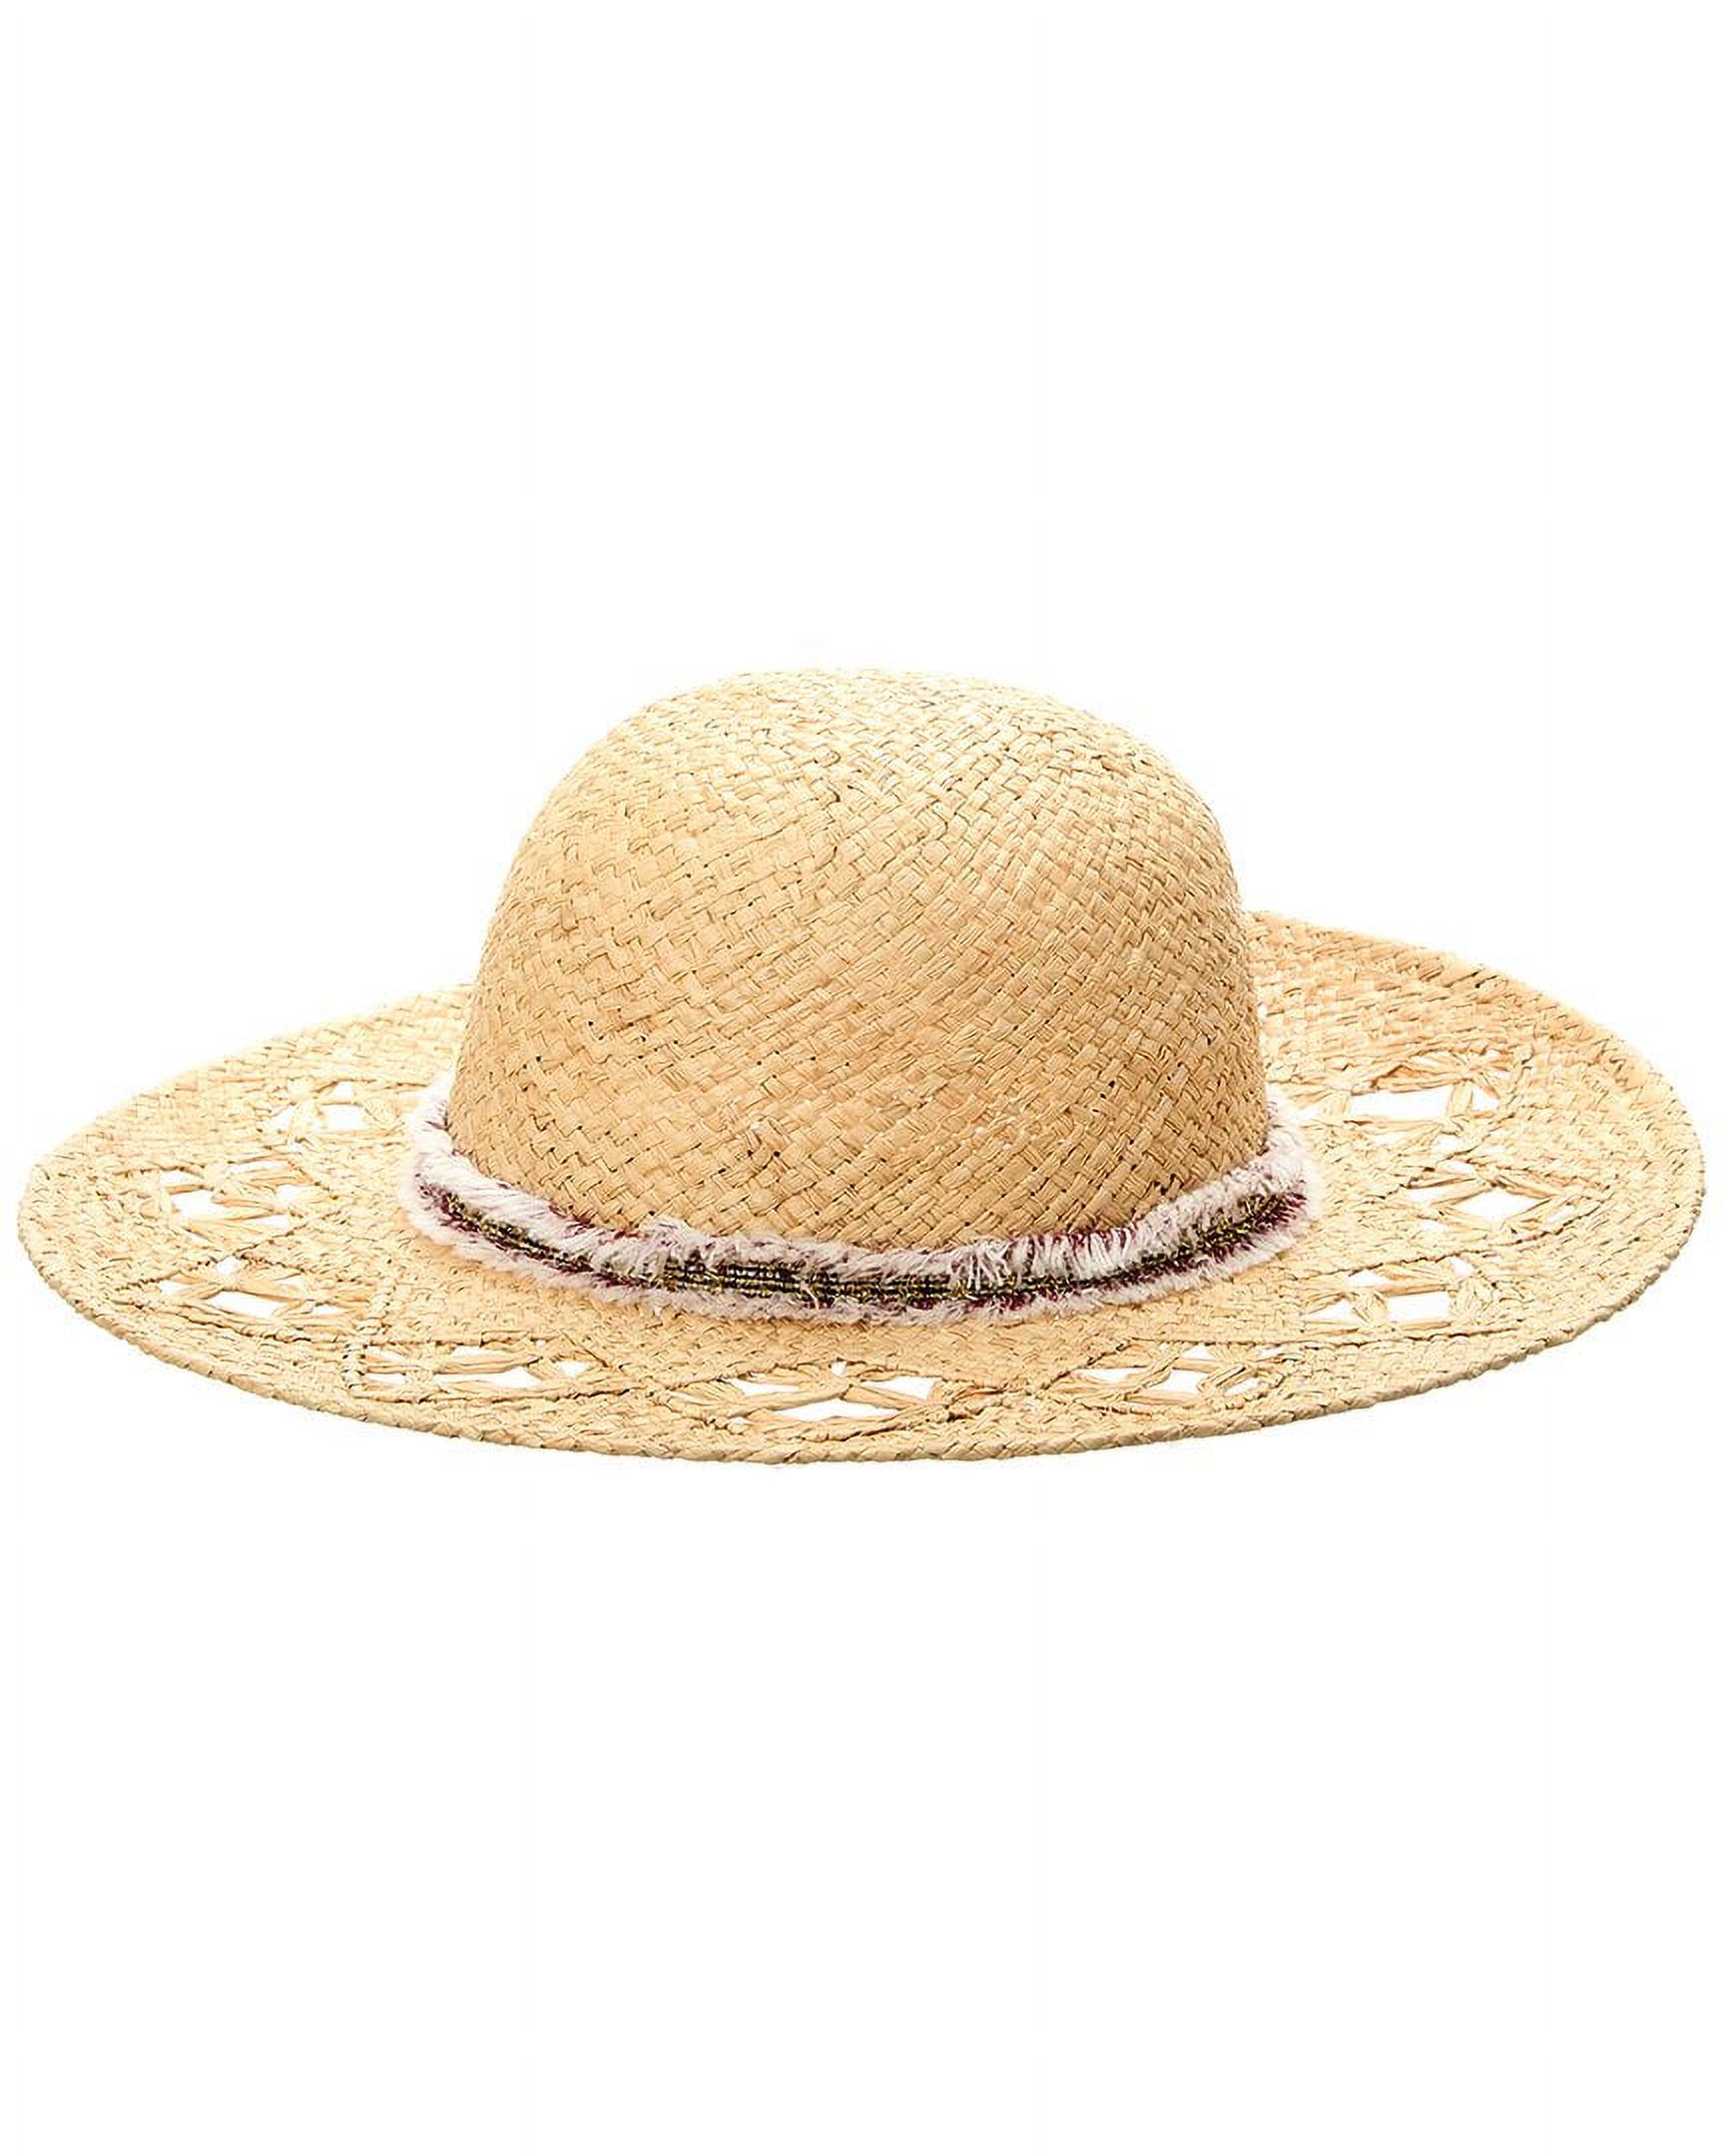 Surell Accessories Raffia Sun Hat, Brown - Walmart.com